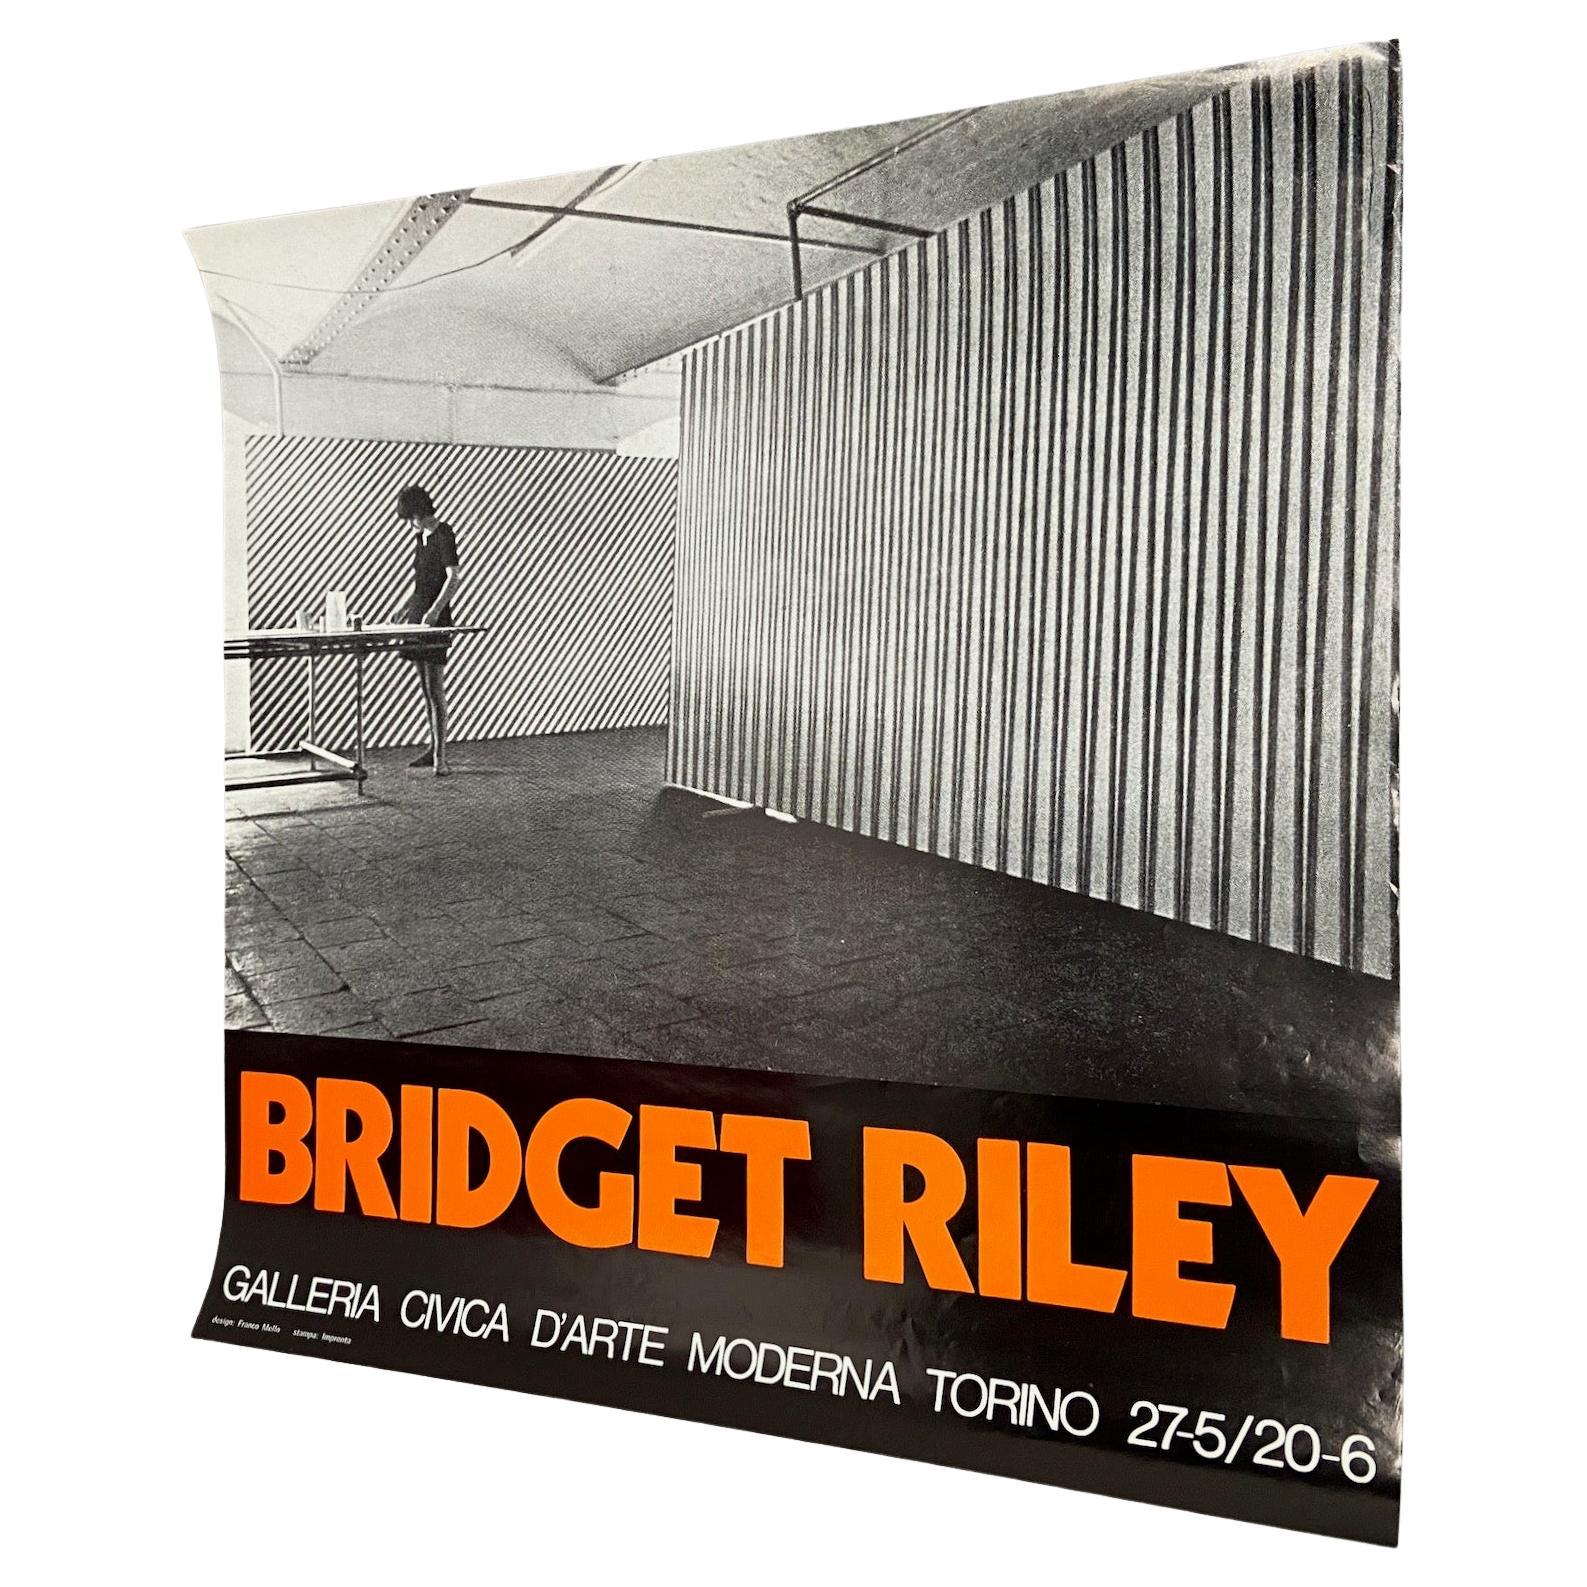 Space Age Bridget Riley, original 1971 Exhibition Poster designed by Franco Mello For Sale